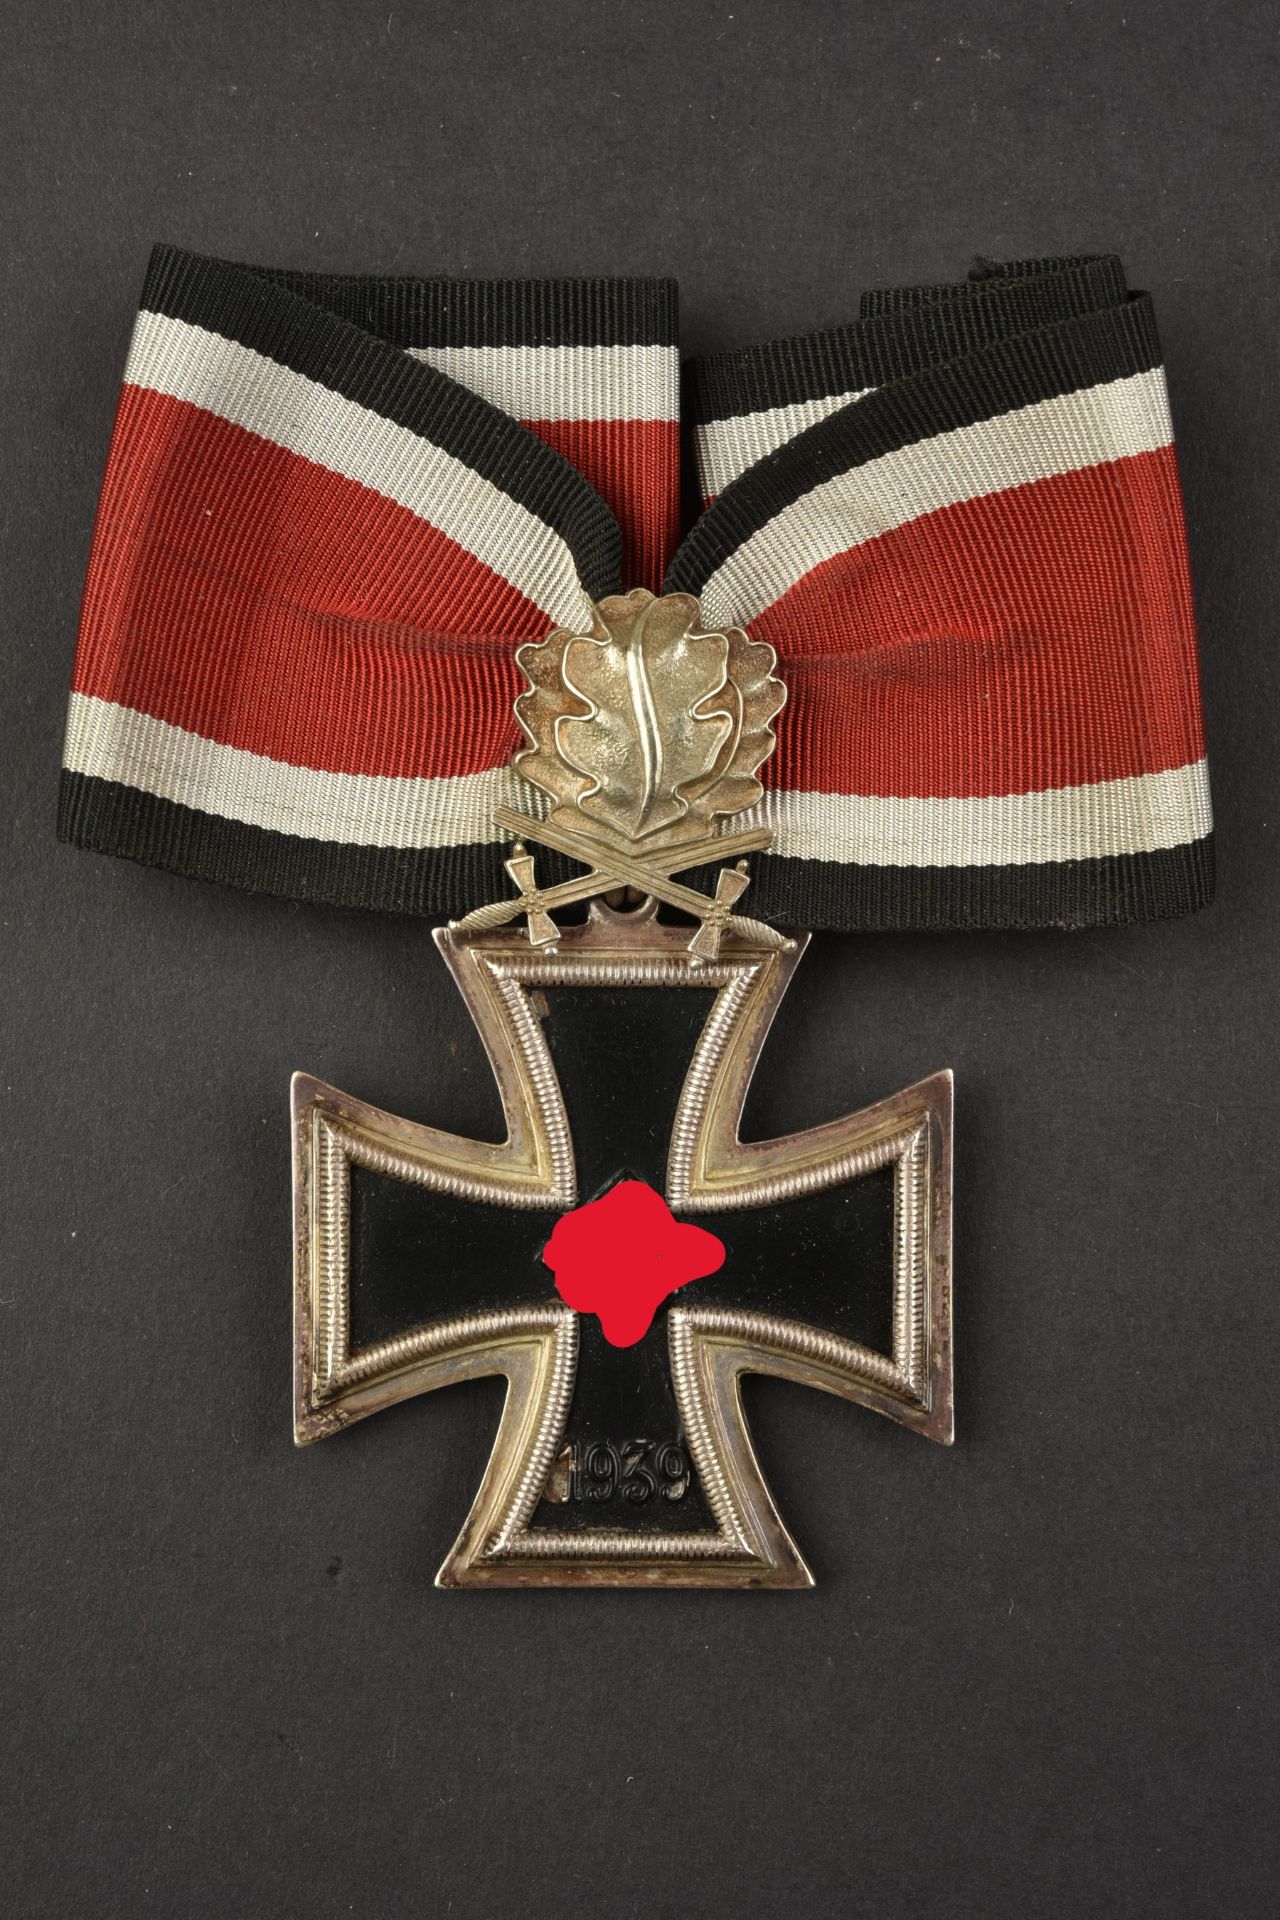 Reproduction de Croix de Chevalier. Reproduction of a Knight s Cross. - Image 11 of 17